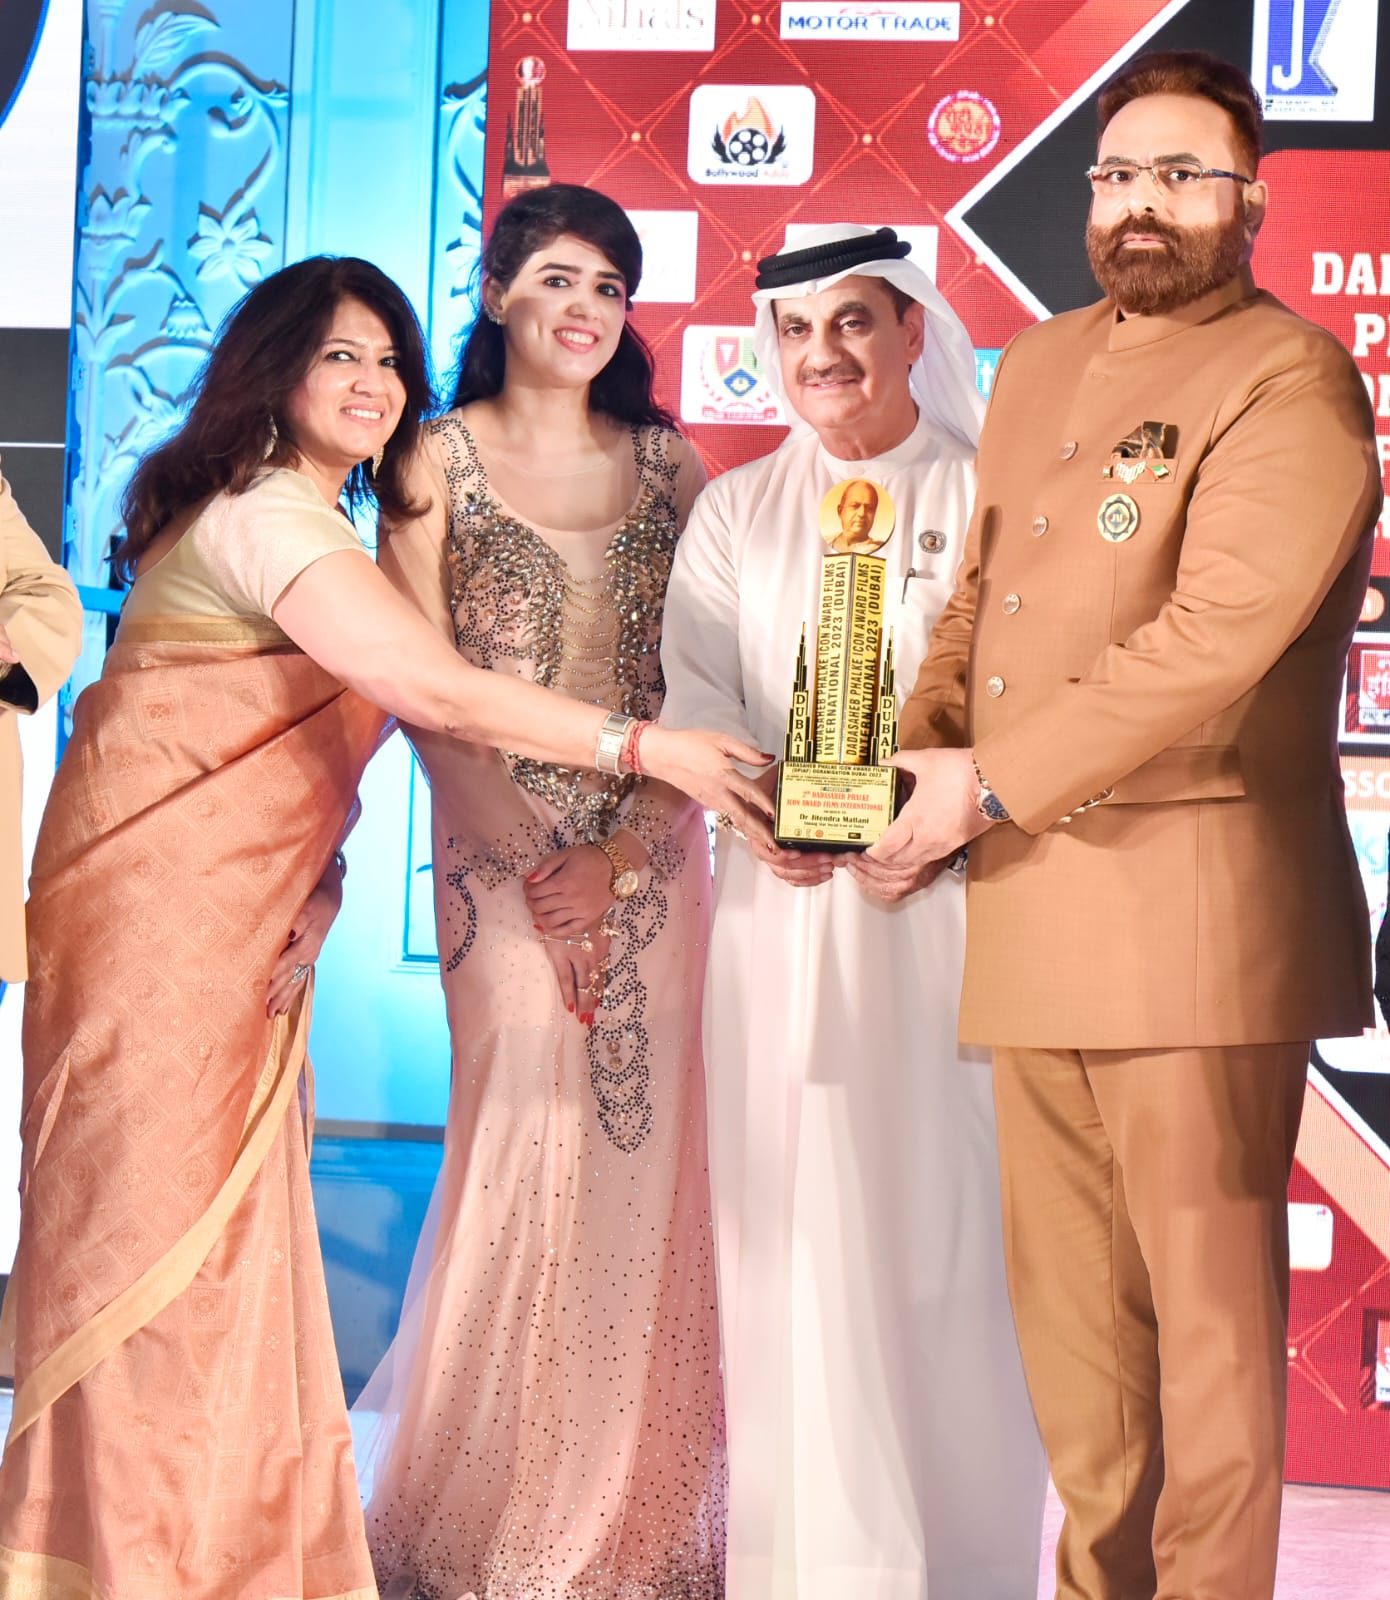 Dr Jitendra Matlani Awarded with Renowned Entrepreneur of Dubai and shining Star Social Icon of Dubai awards.